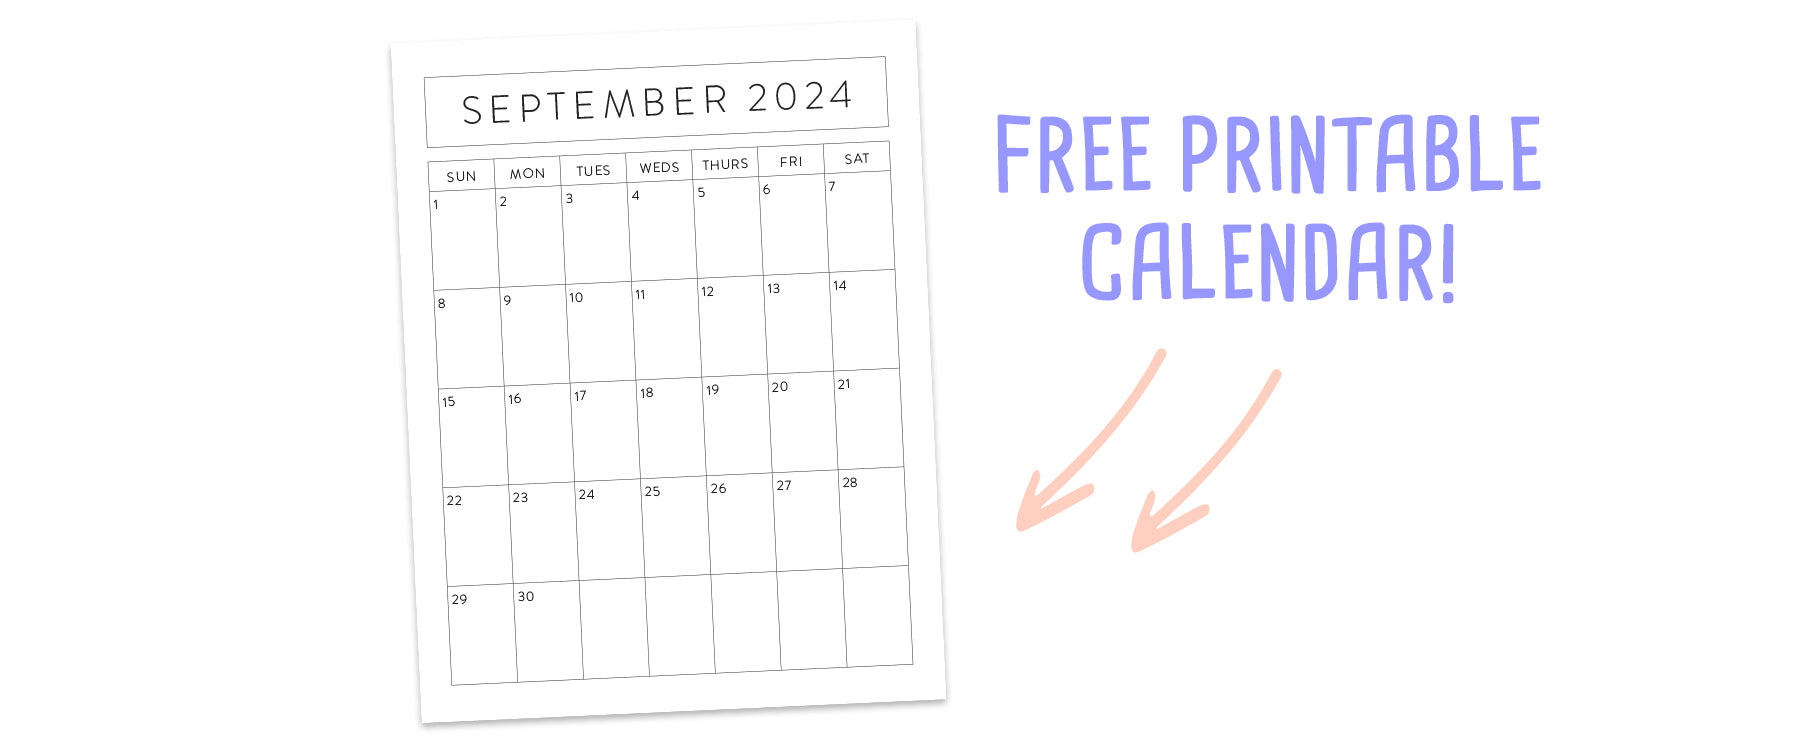 Free Printable Calendar Template